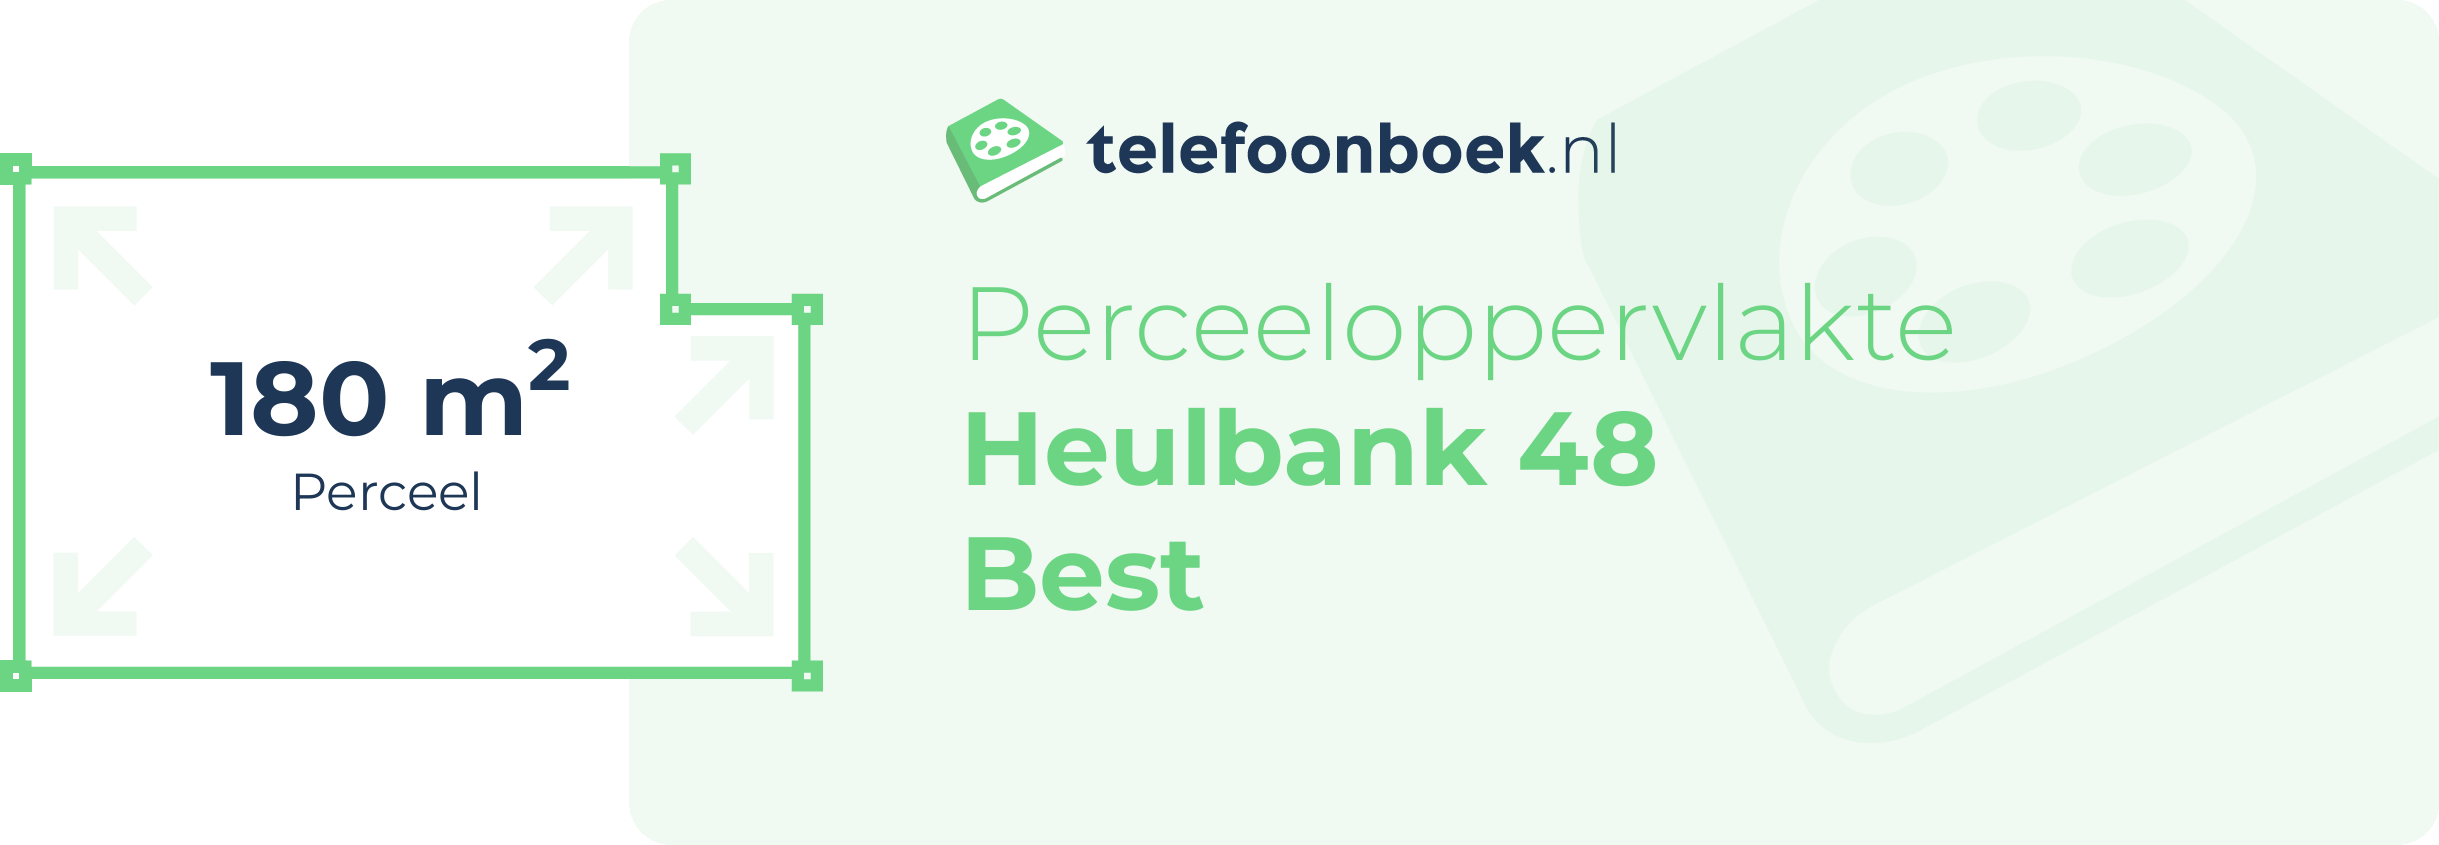 Perceeloppervlakte Heulbank 48 Best